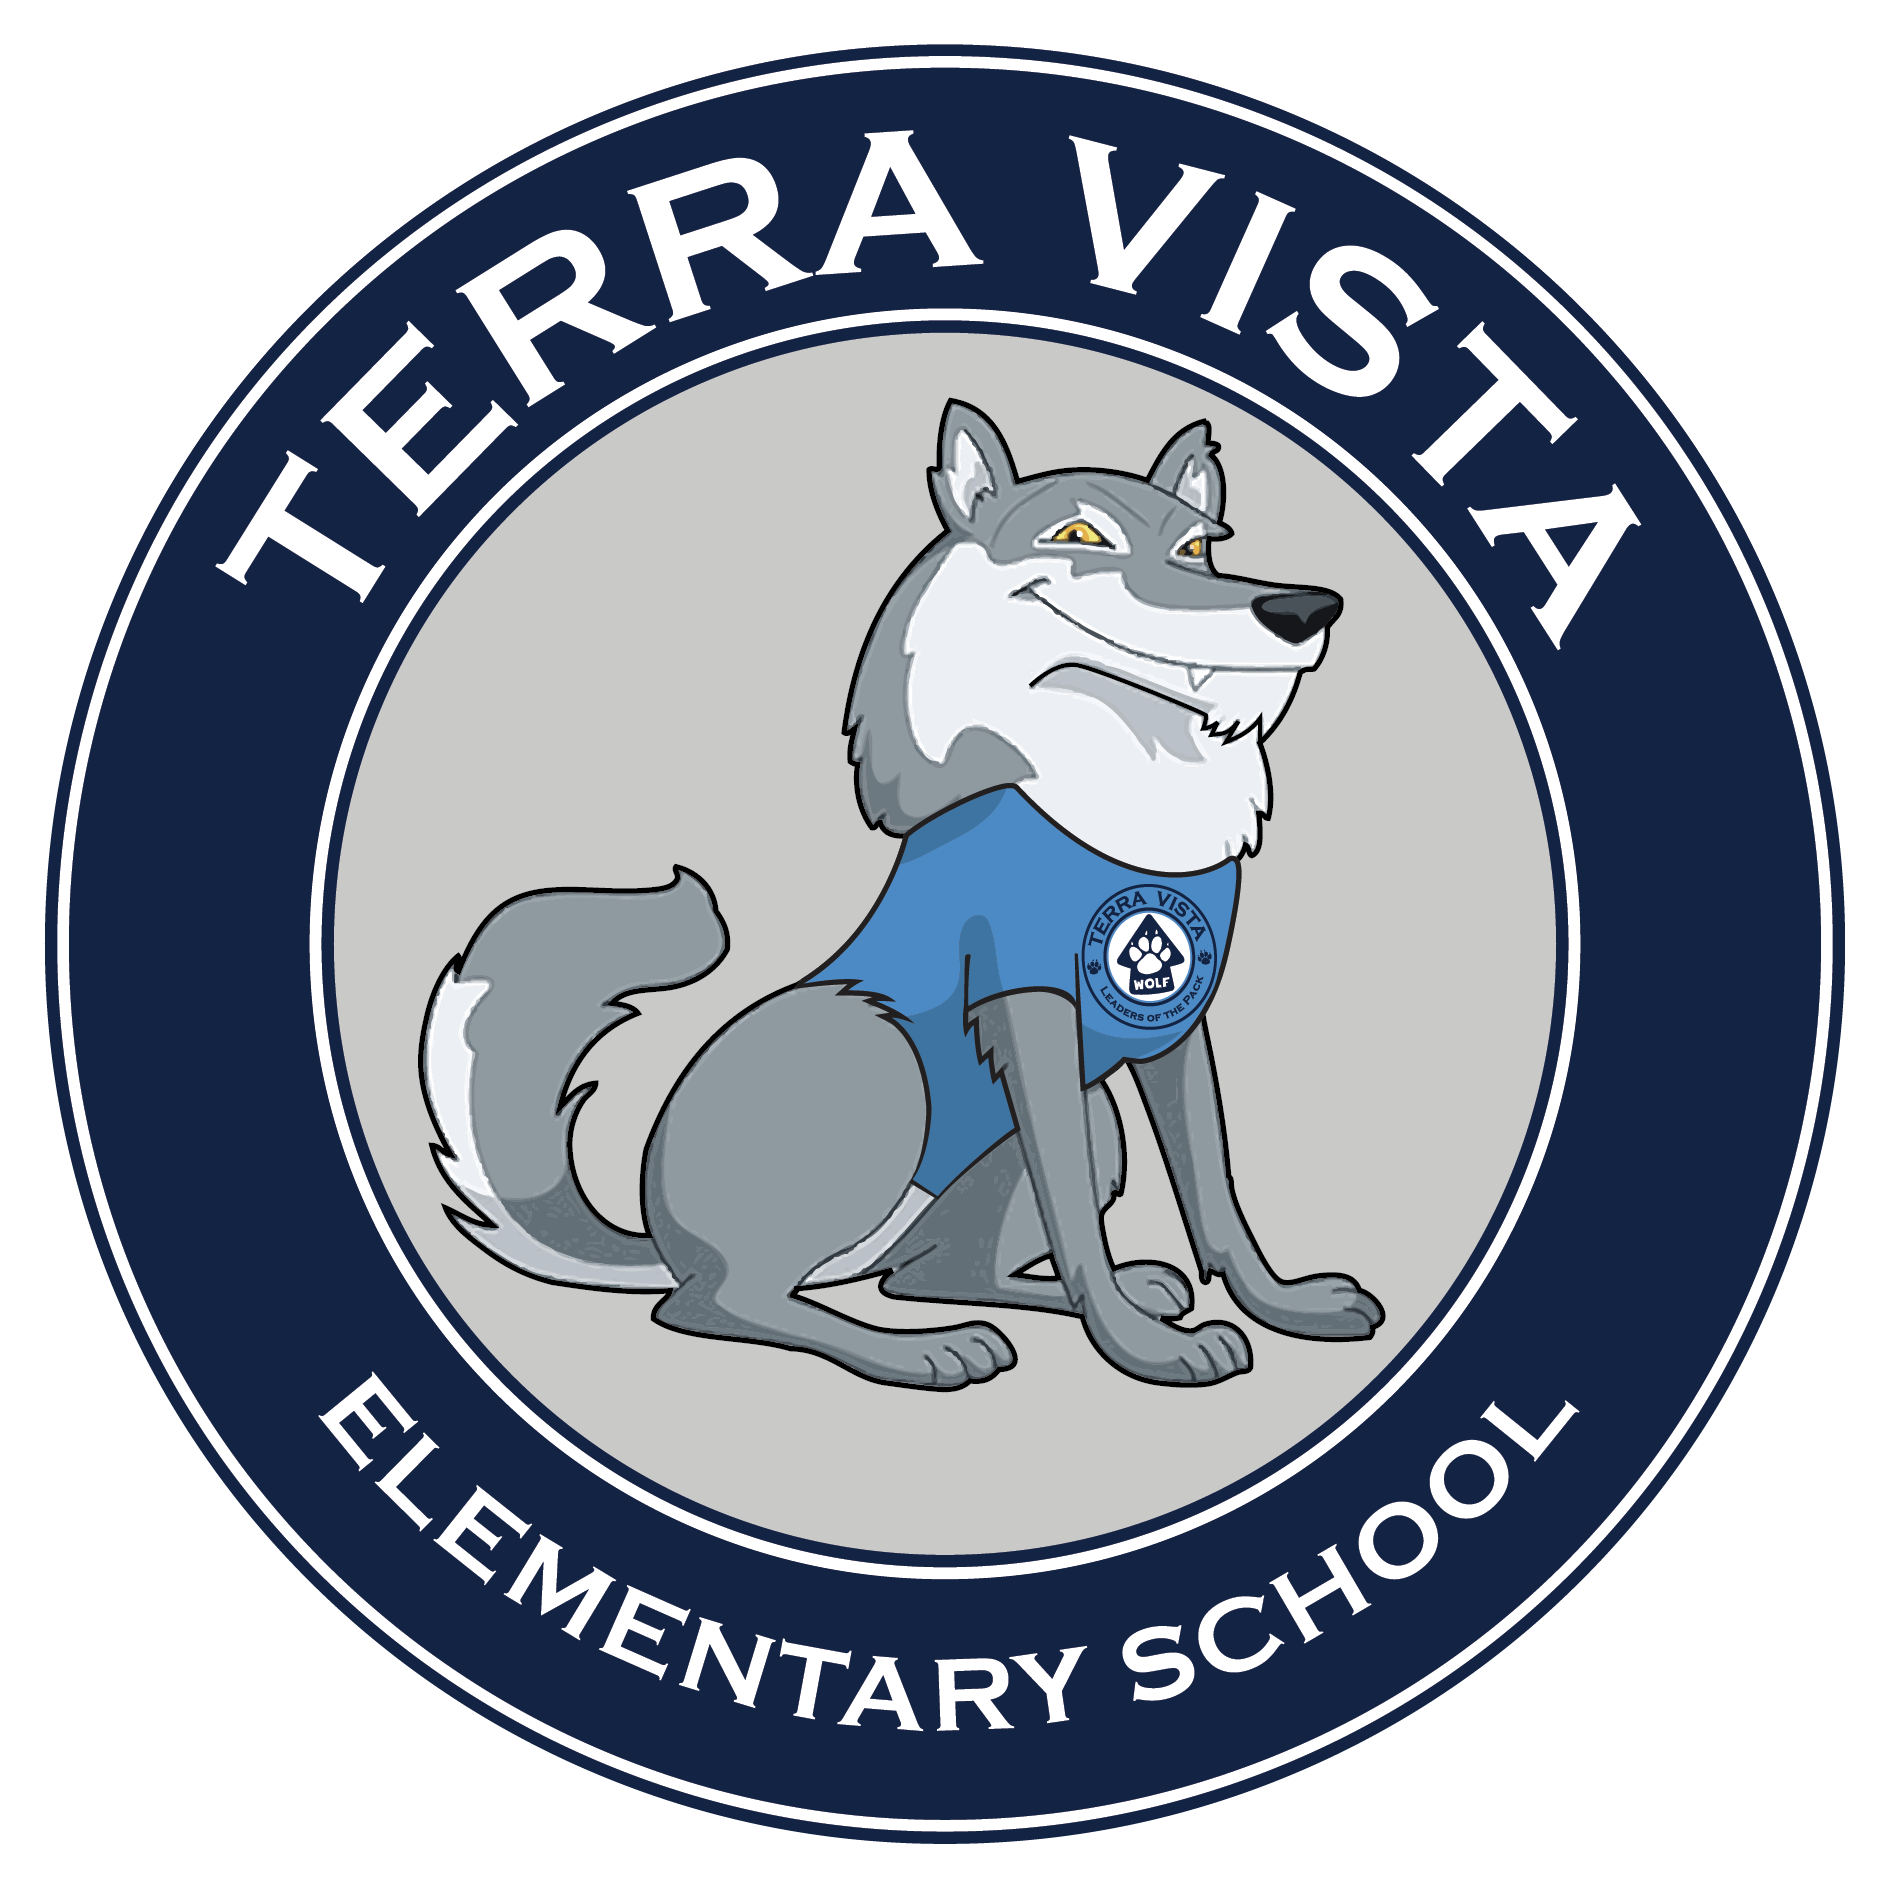 Terra Vista Elementary School